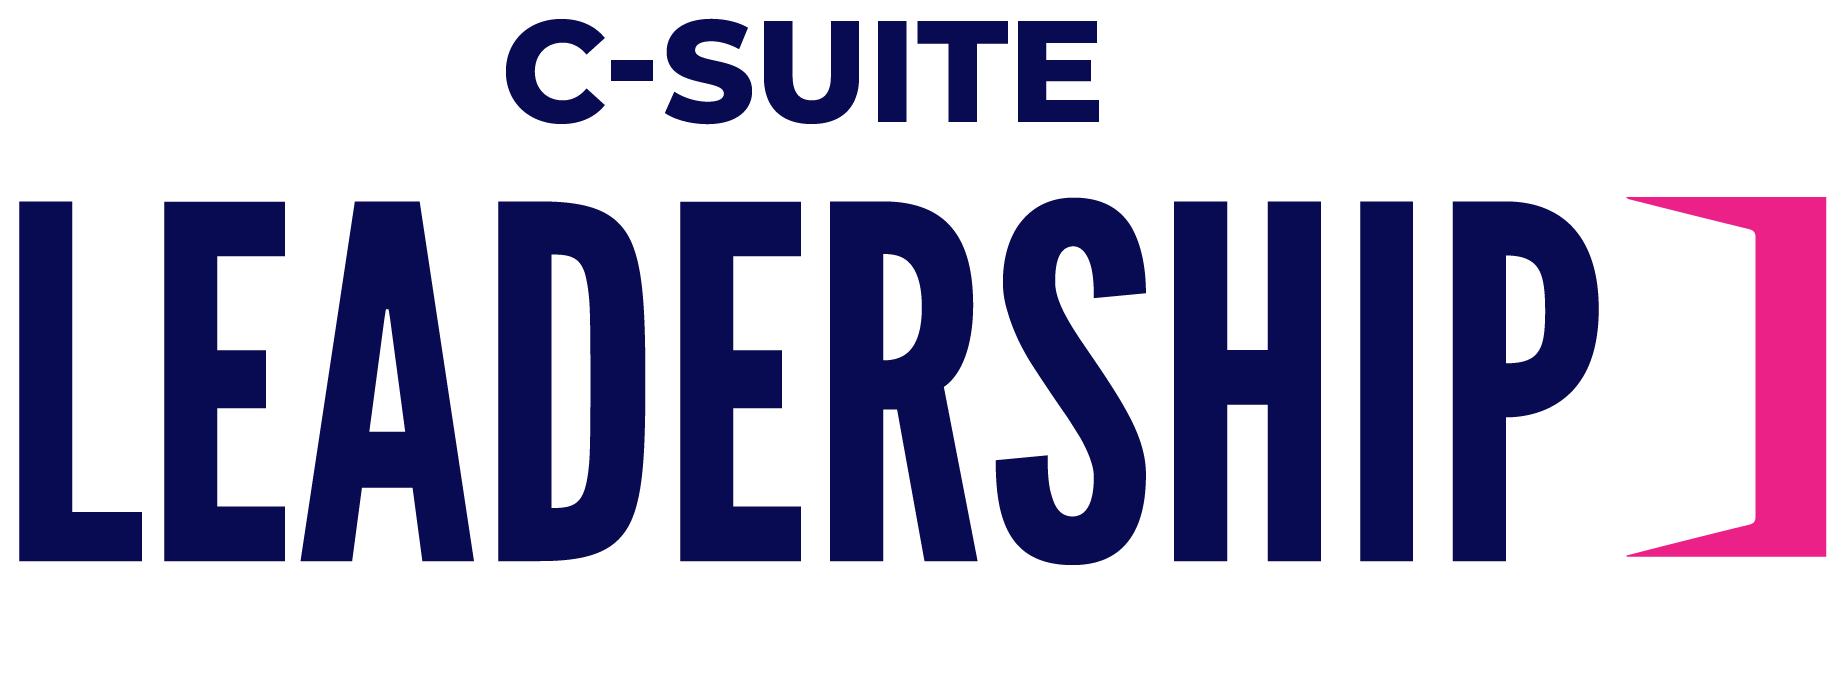 CSL_Blue logo